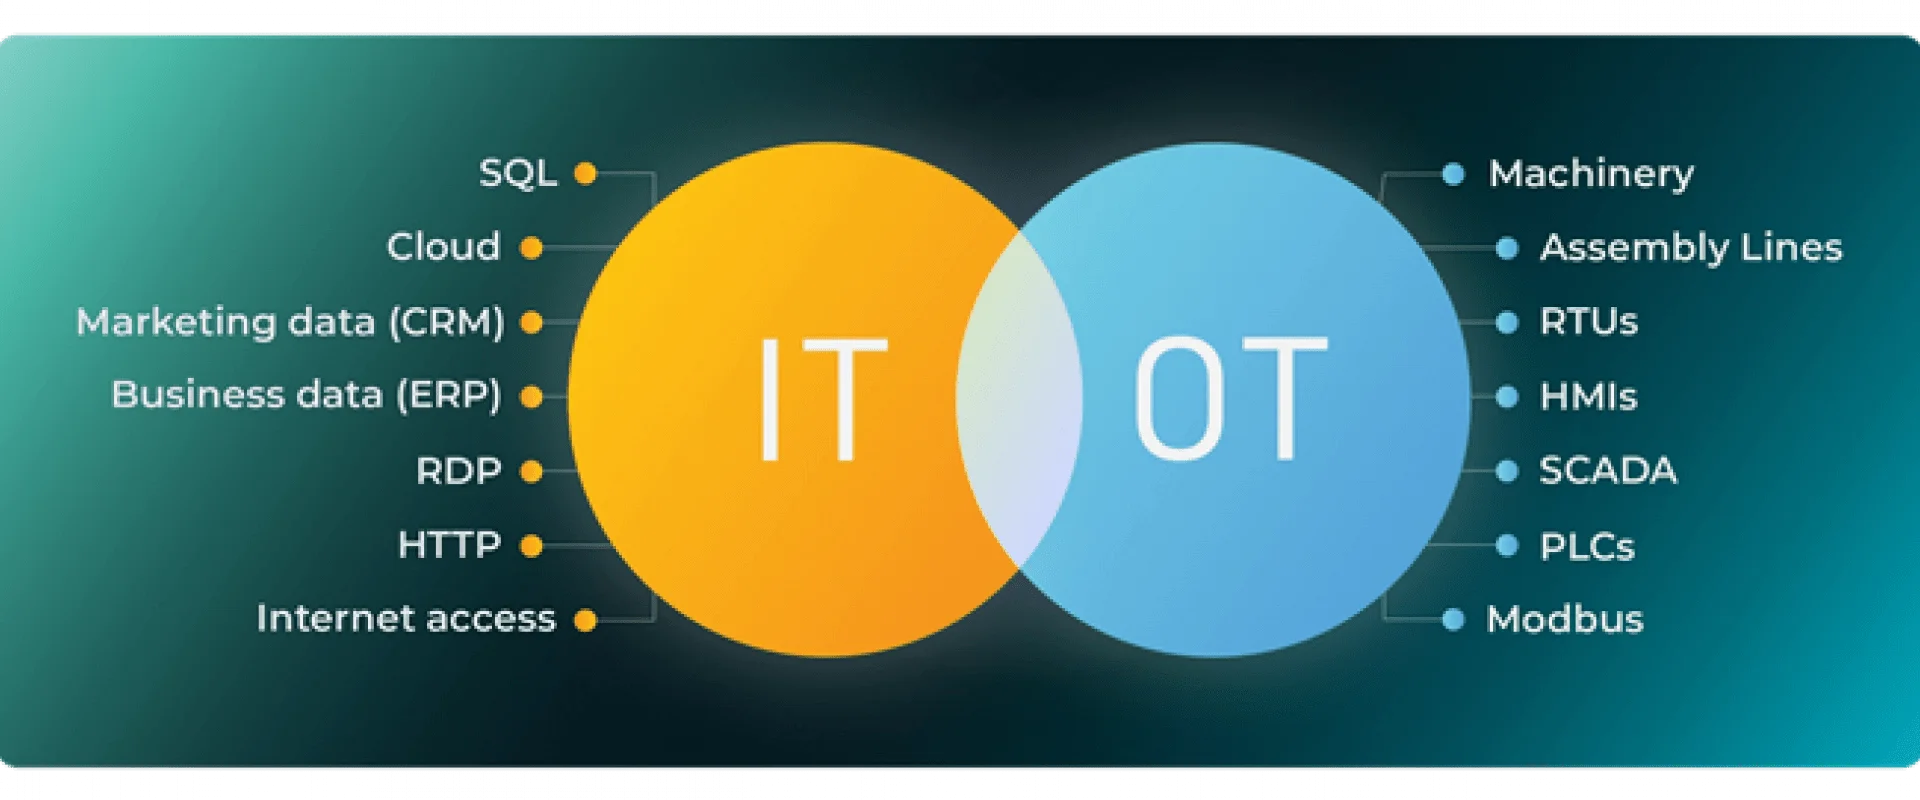 IT/OT Components (Image:ZippyOps)